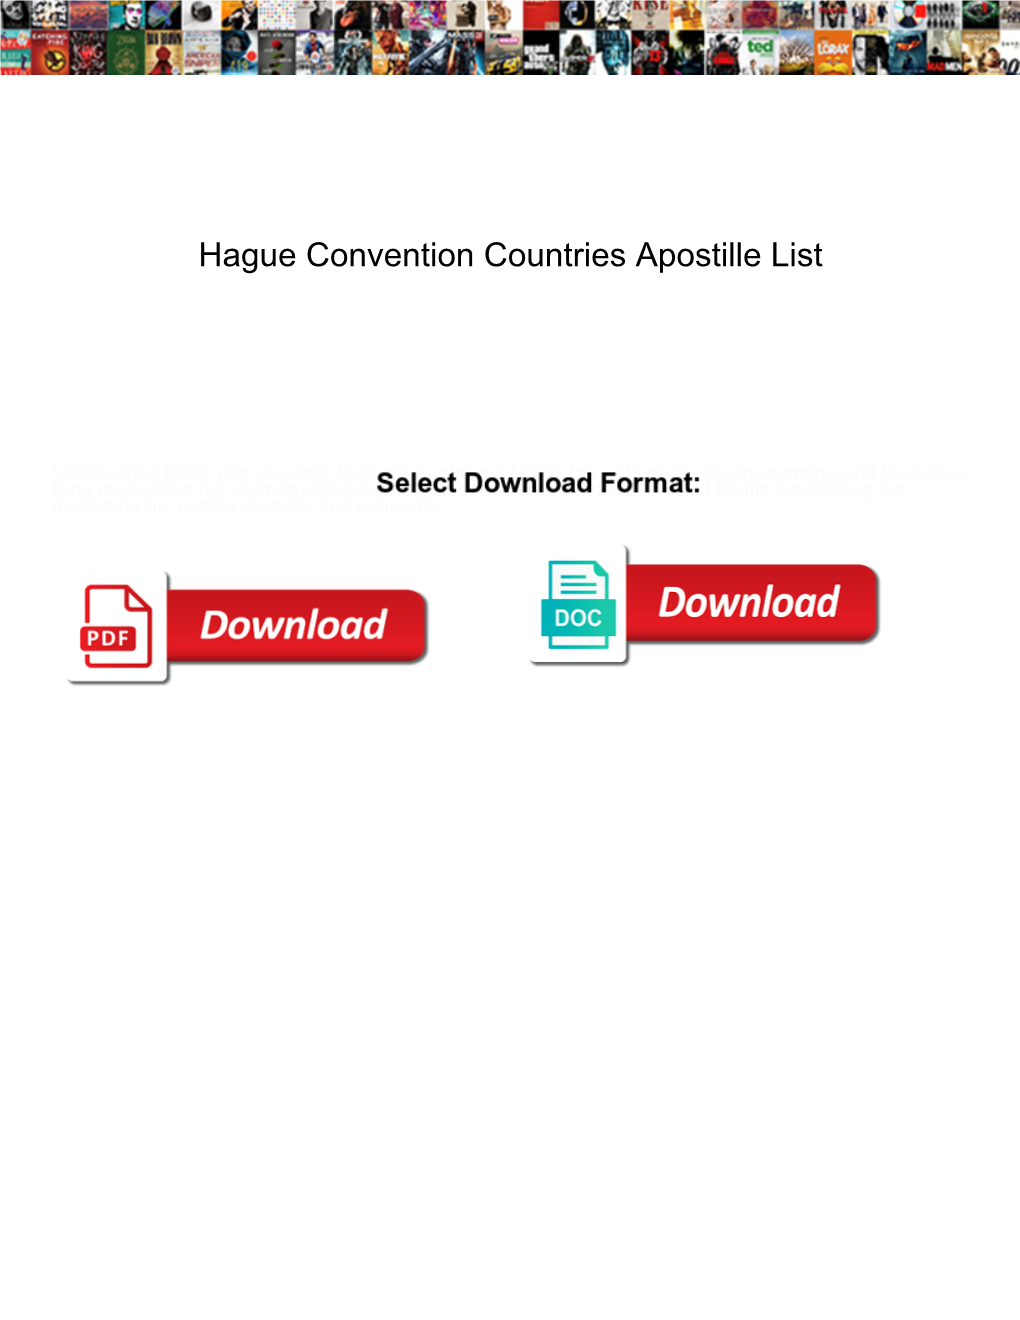 Hague Convention Countries Apostille List